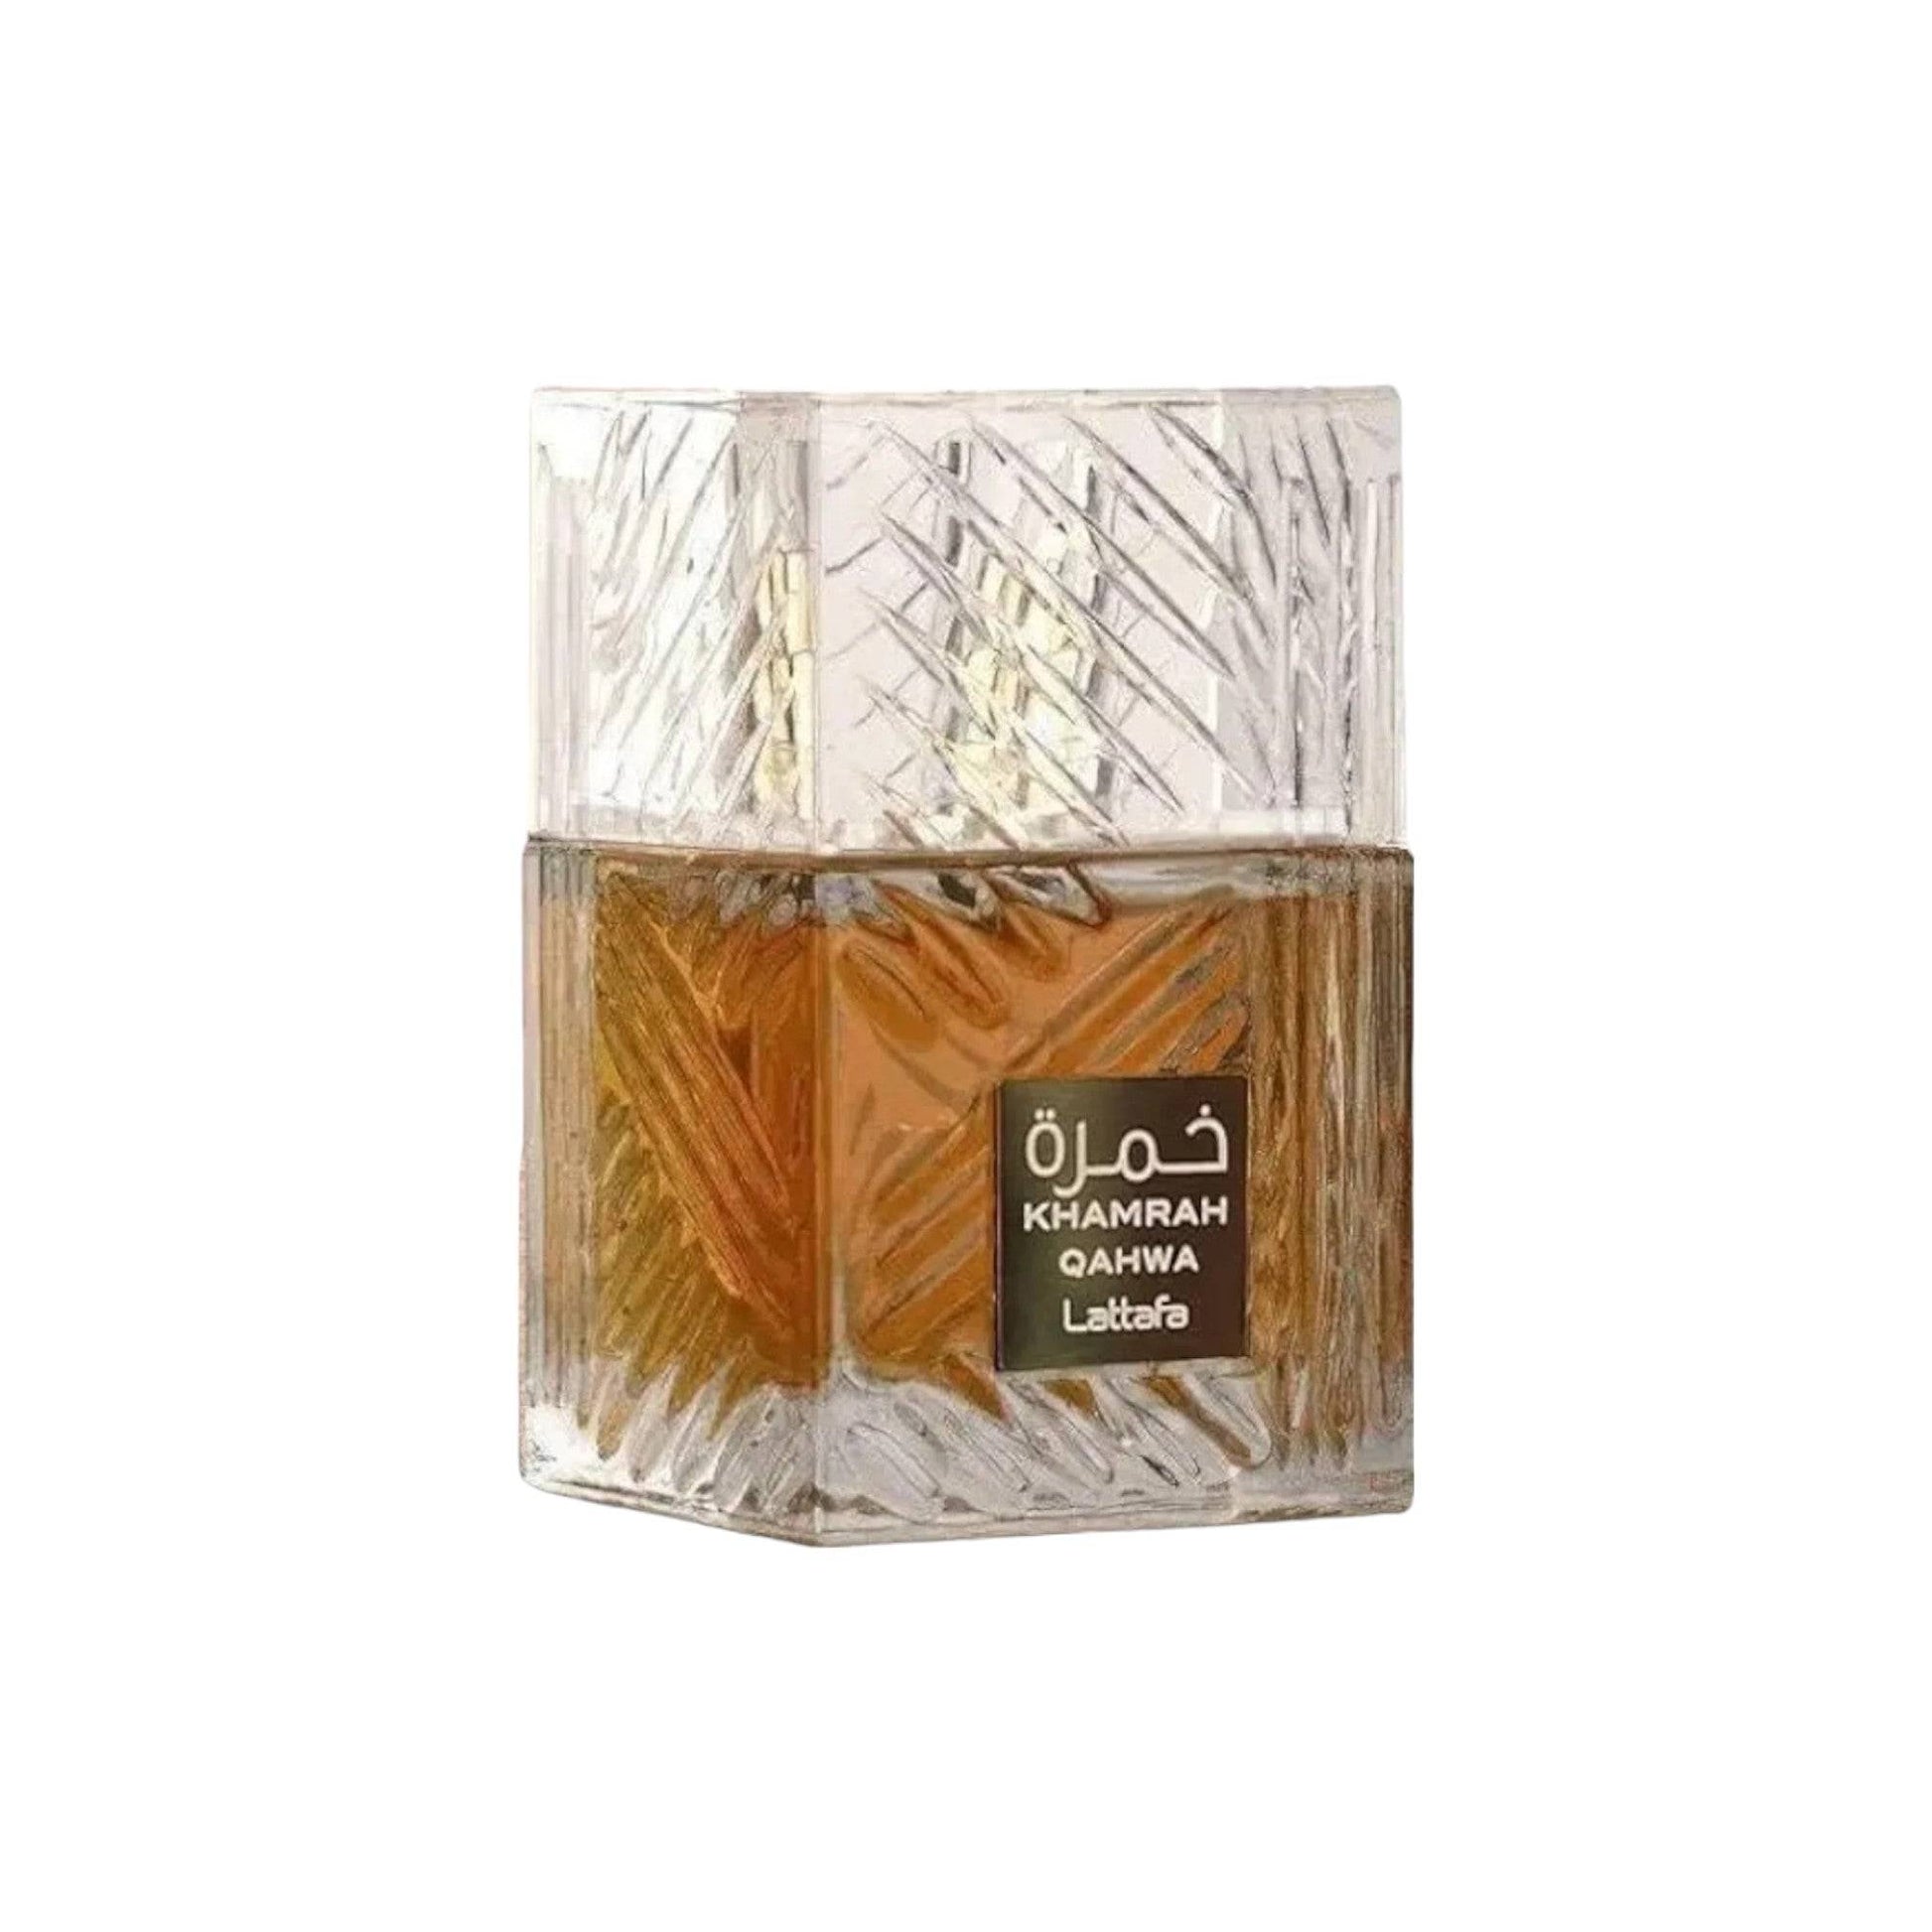 Luxurious Khamrah Qahwa Eau De Parfum by Lattafa, capturing the essence of traditional Qahwa.